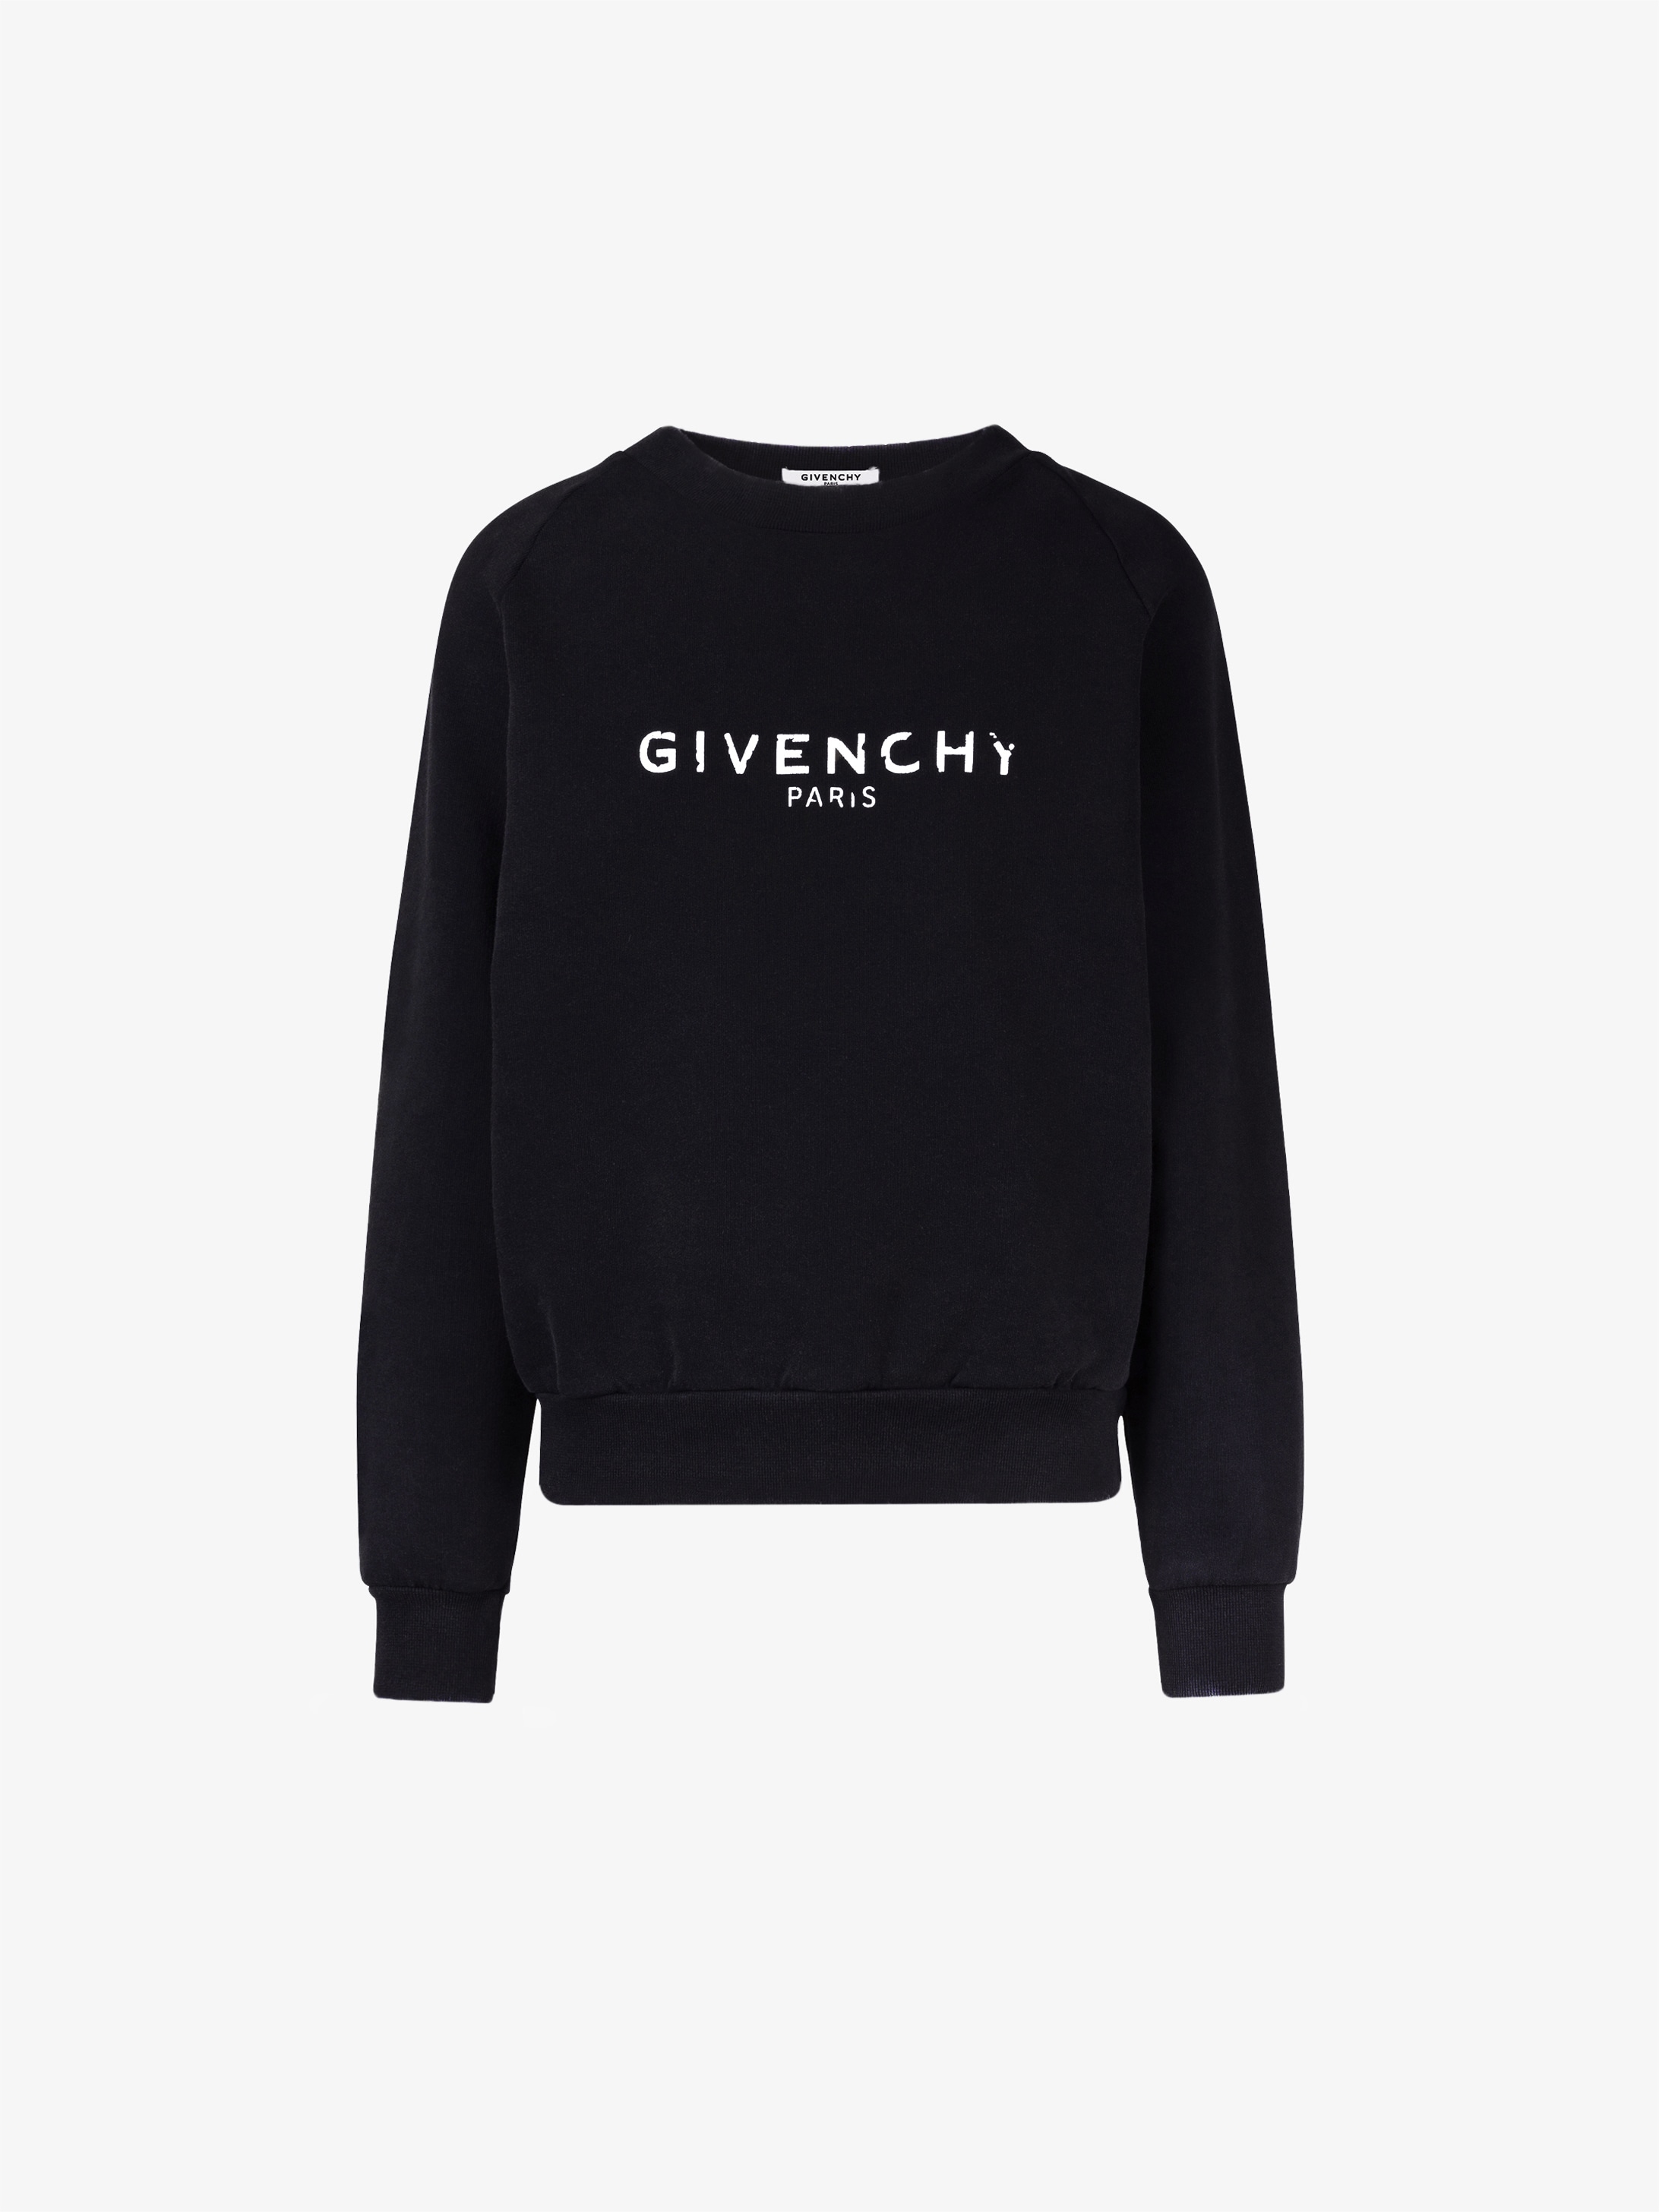 givenchy paris sweater